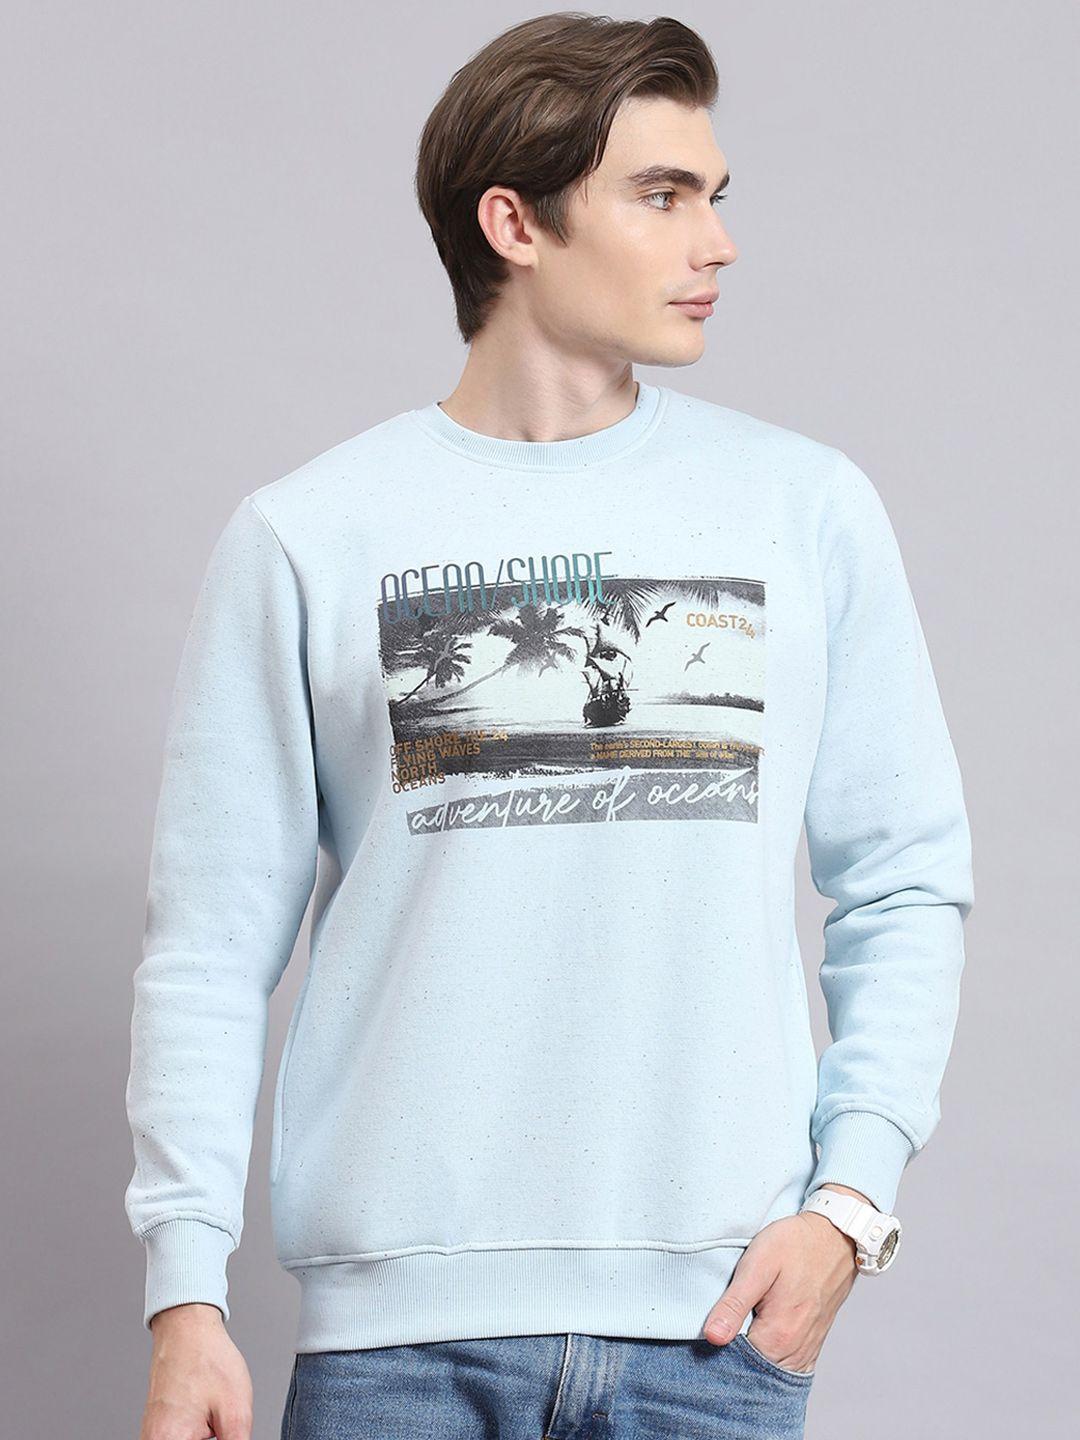 monte carlo graphic printed round neck cotton pullover sweatshirt